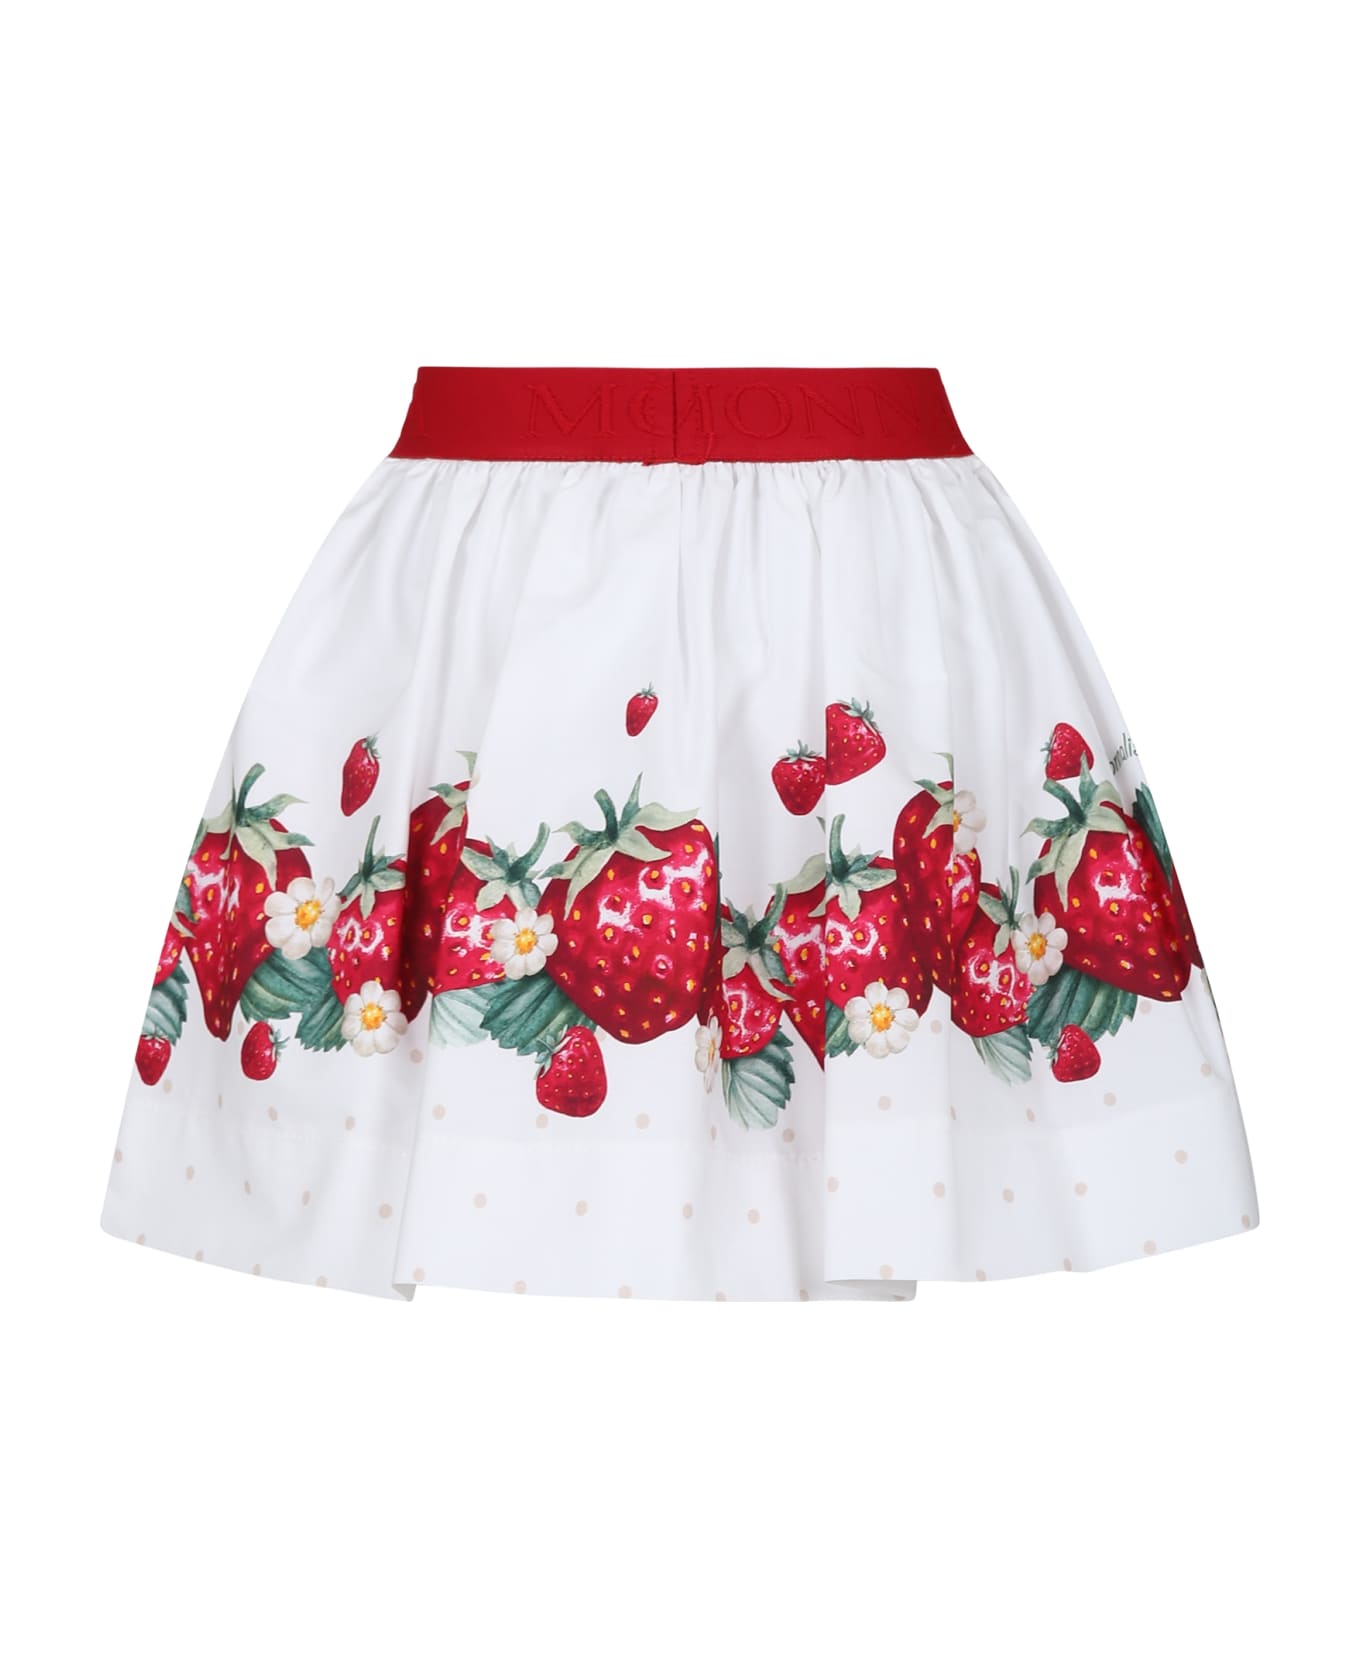 Monnalisa White Skirt For Girl With Strawberry Print - White